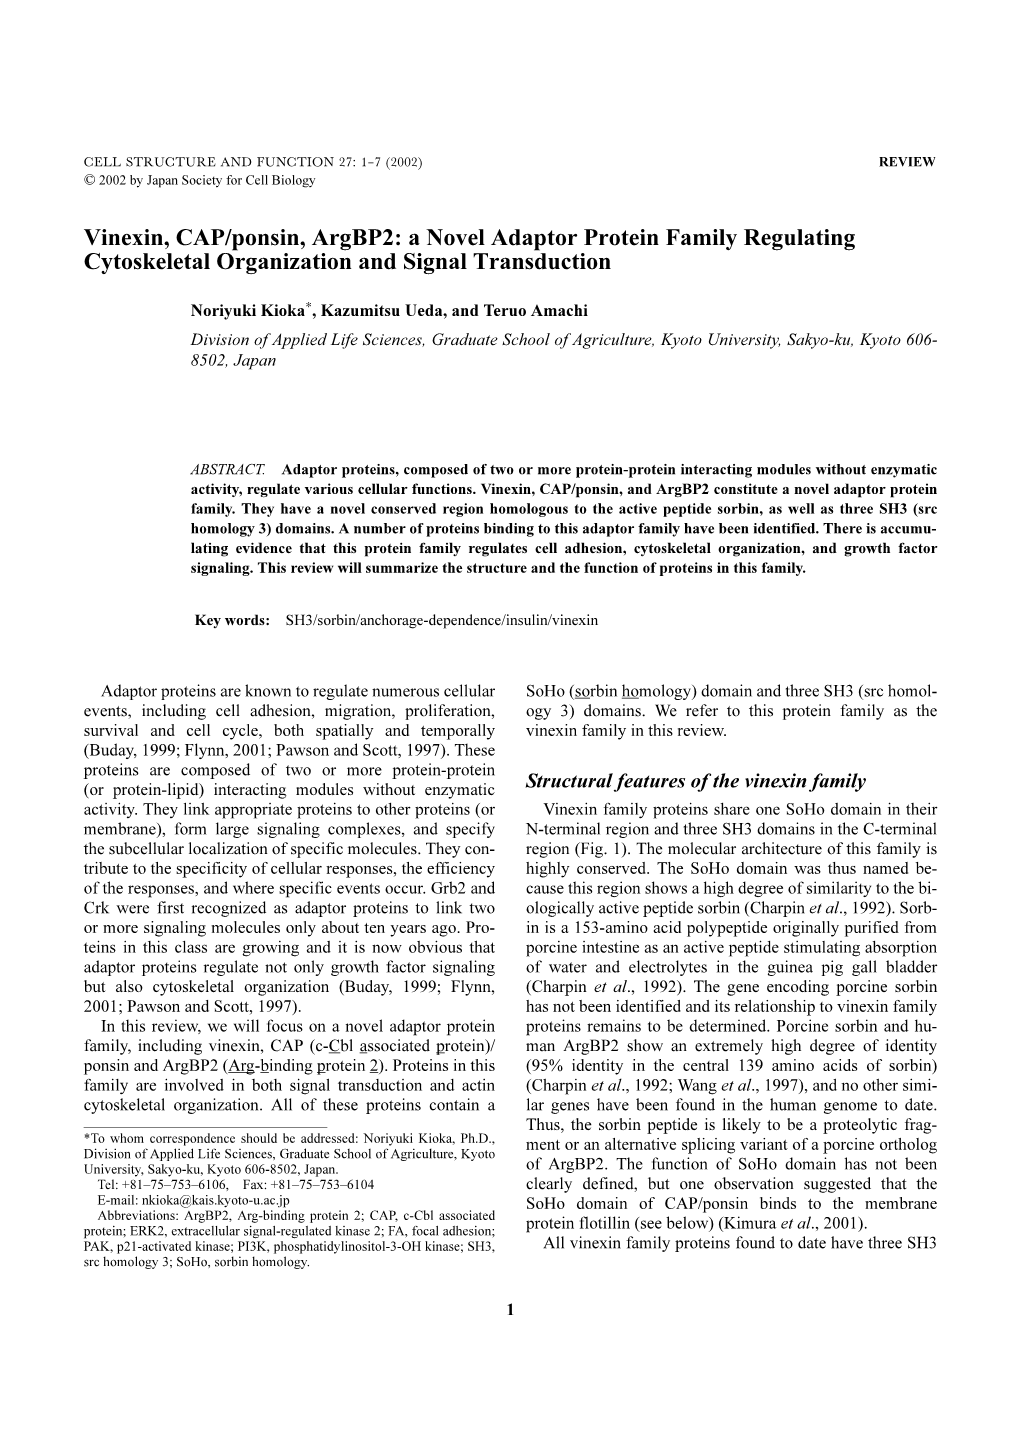 Vinexin, CAP/Ponsin, Argbp2: a Novel Adaptor Protein Family Regulating Cytoskeletal Organization and Signal Transduction